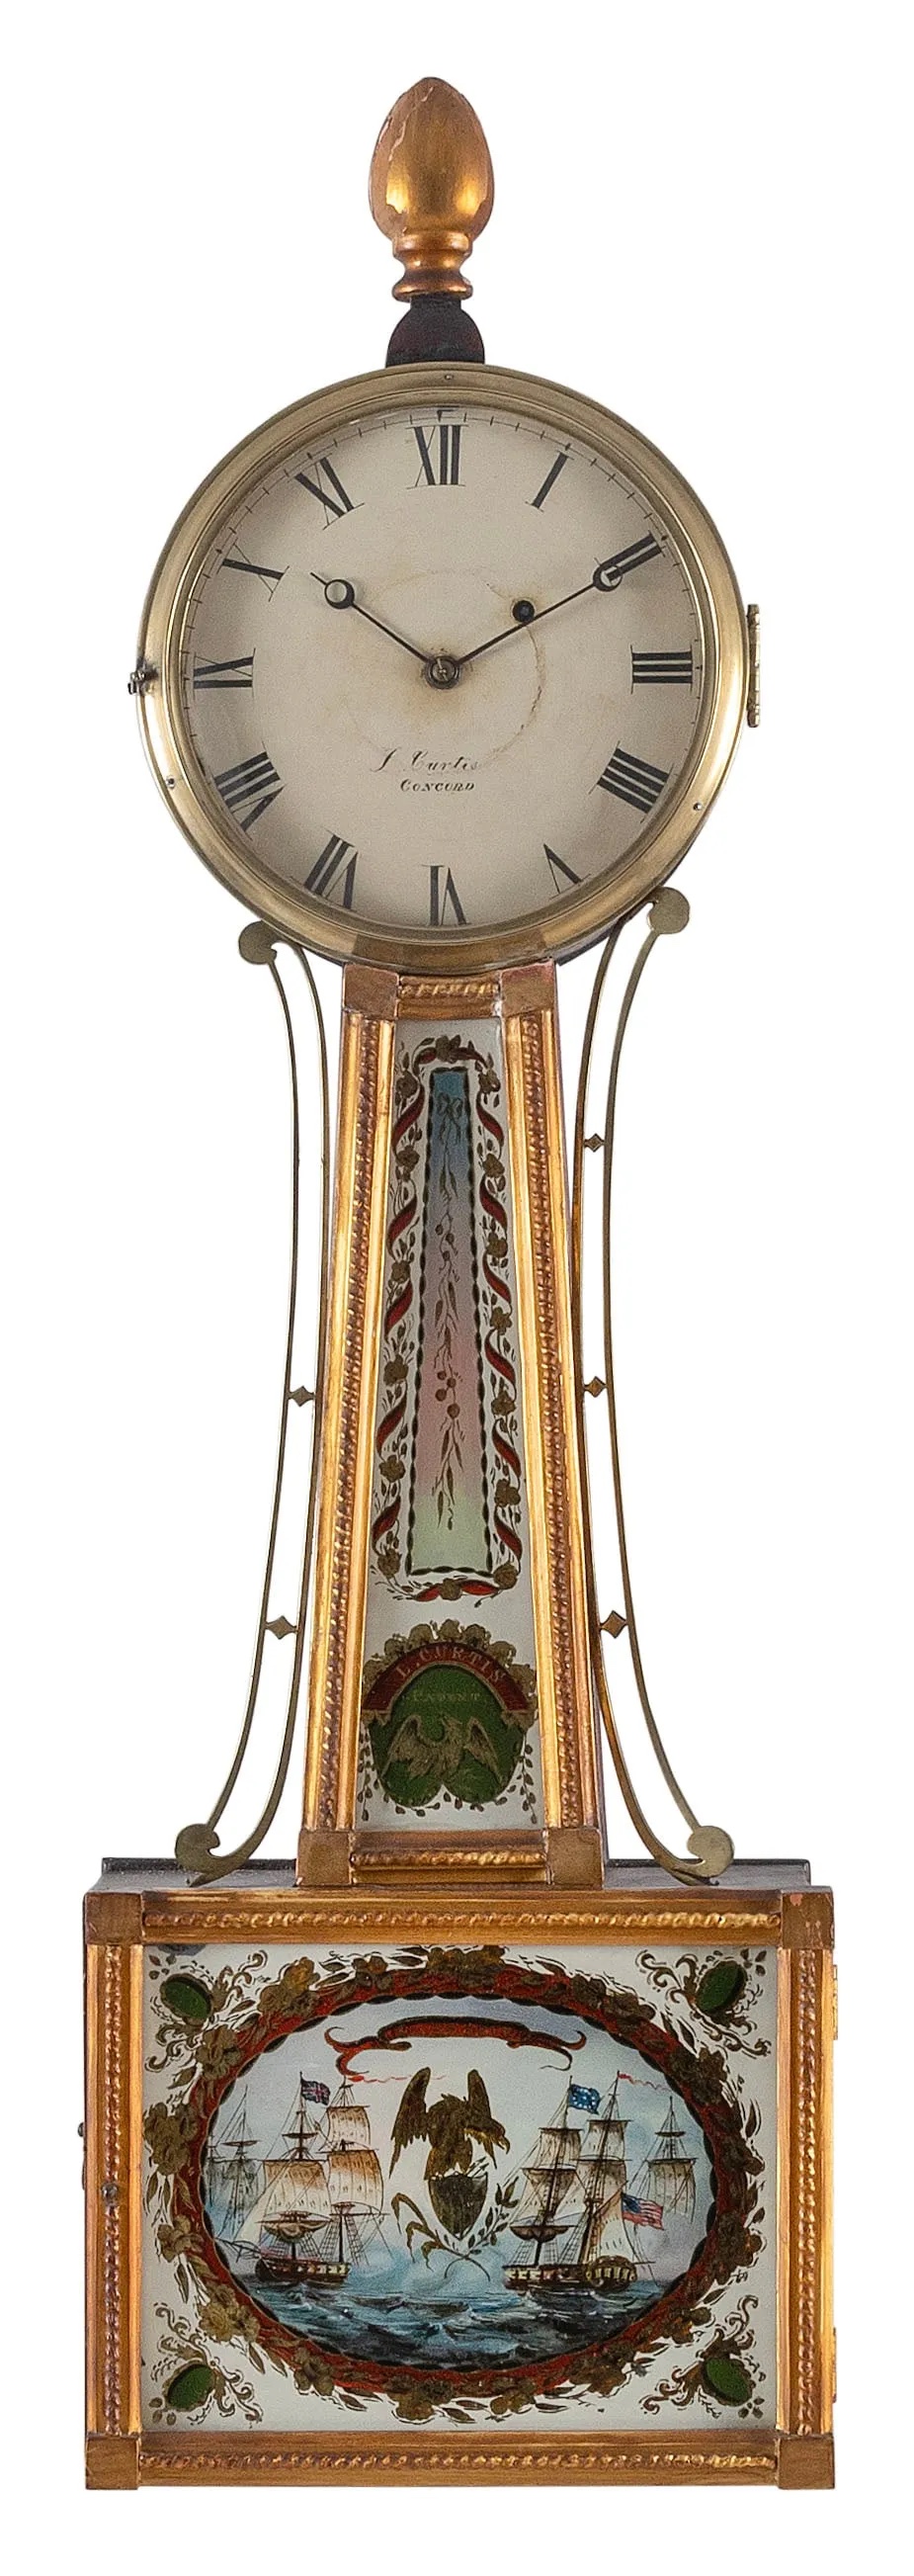 Lemuel Curtis banjo clock, estimated at $3,000-$5,000 at Eldred's.